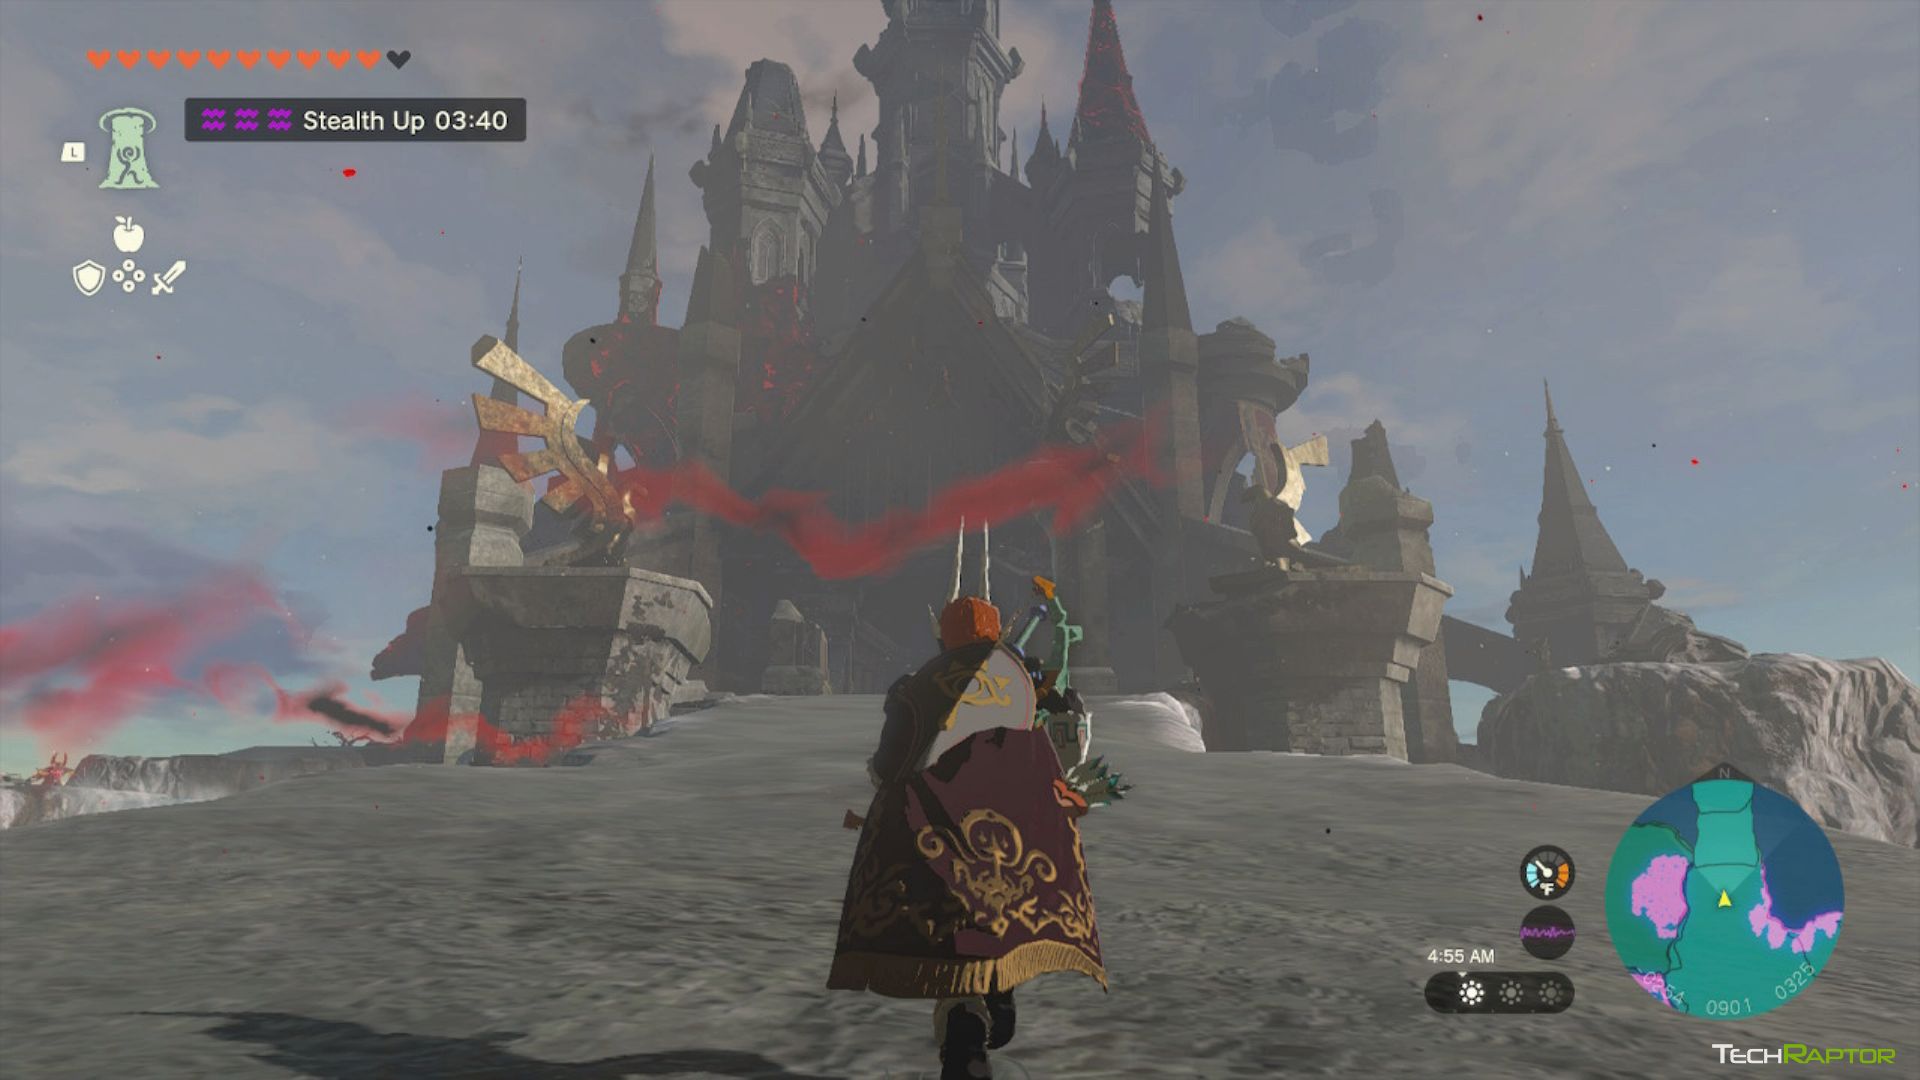 Link approaching Castle Hyrule Sanctum to obtain the Champion's Tunic